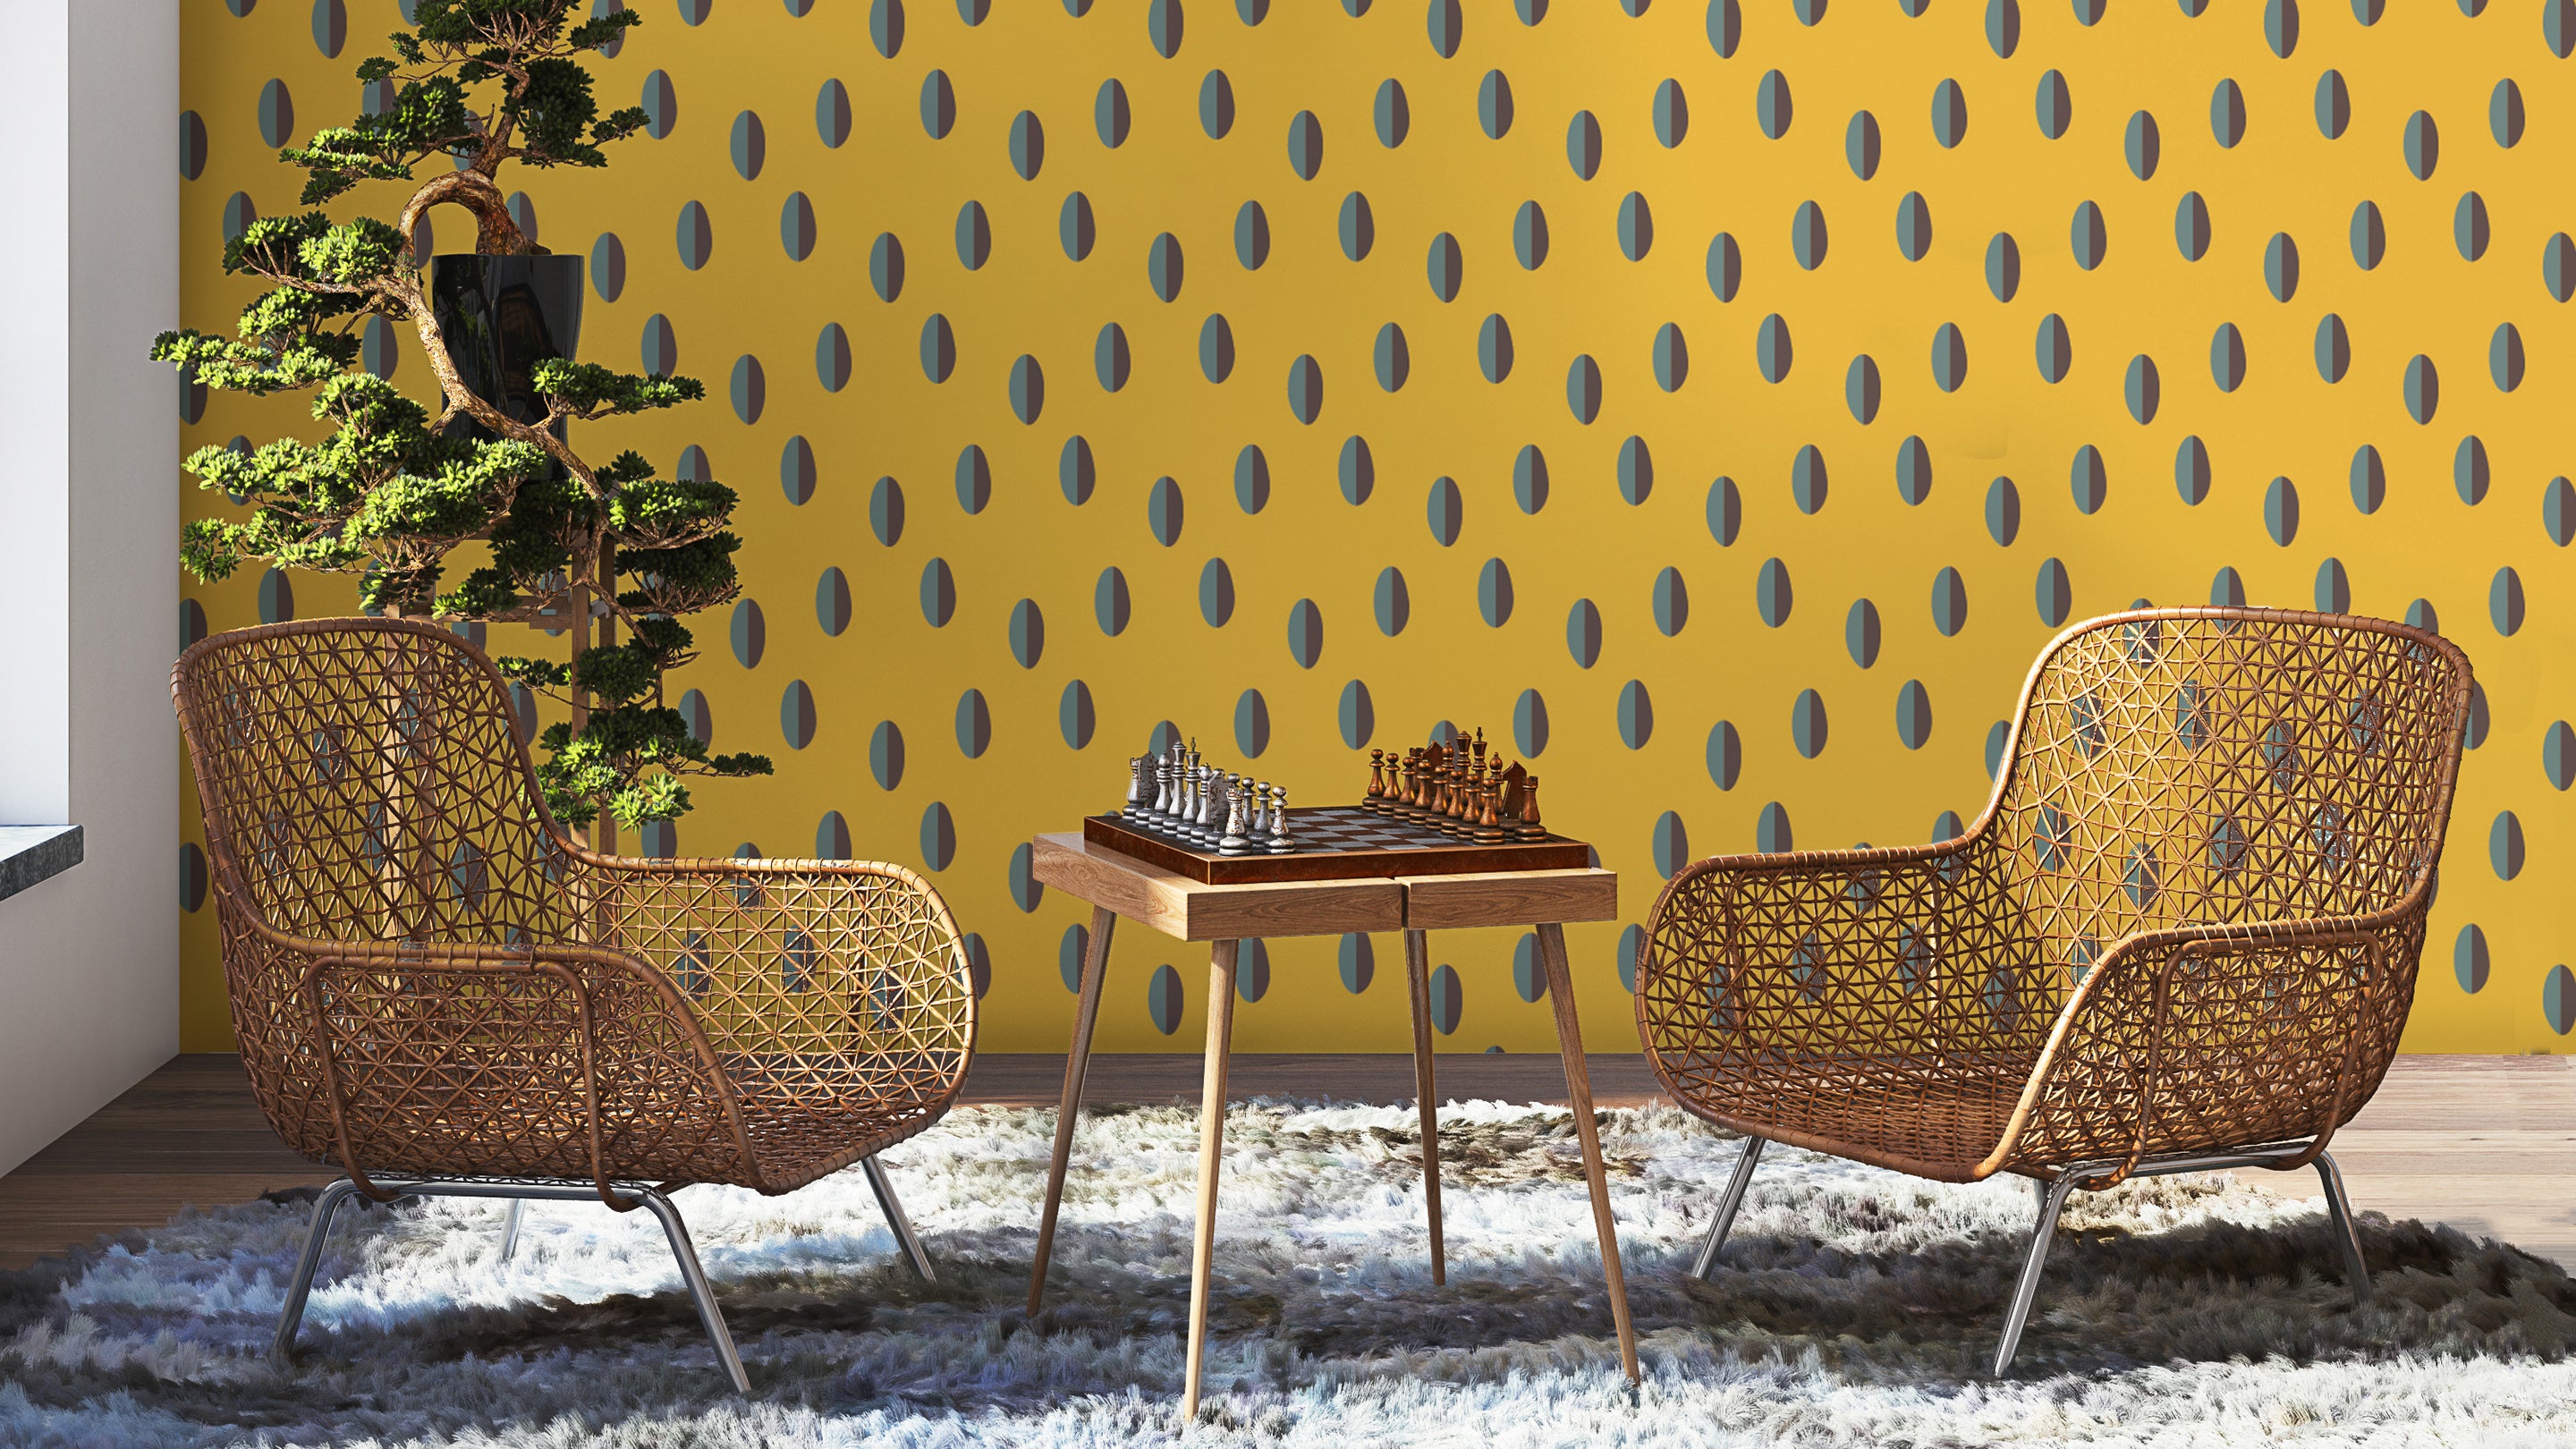 yellow polka dot wallpaper